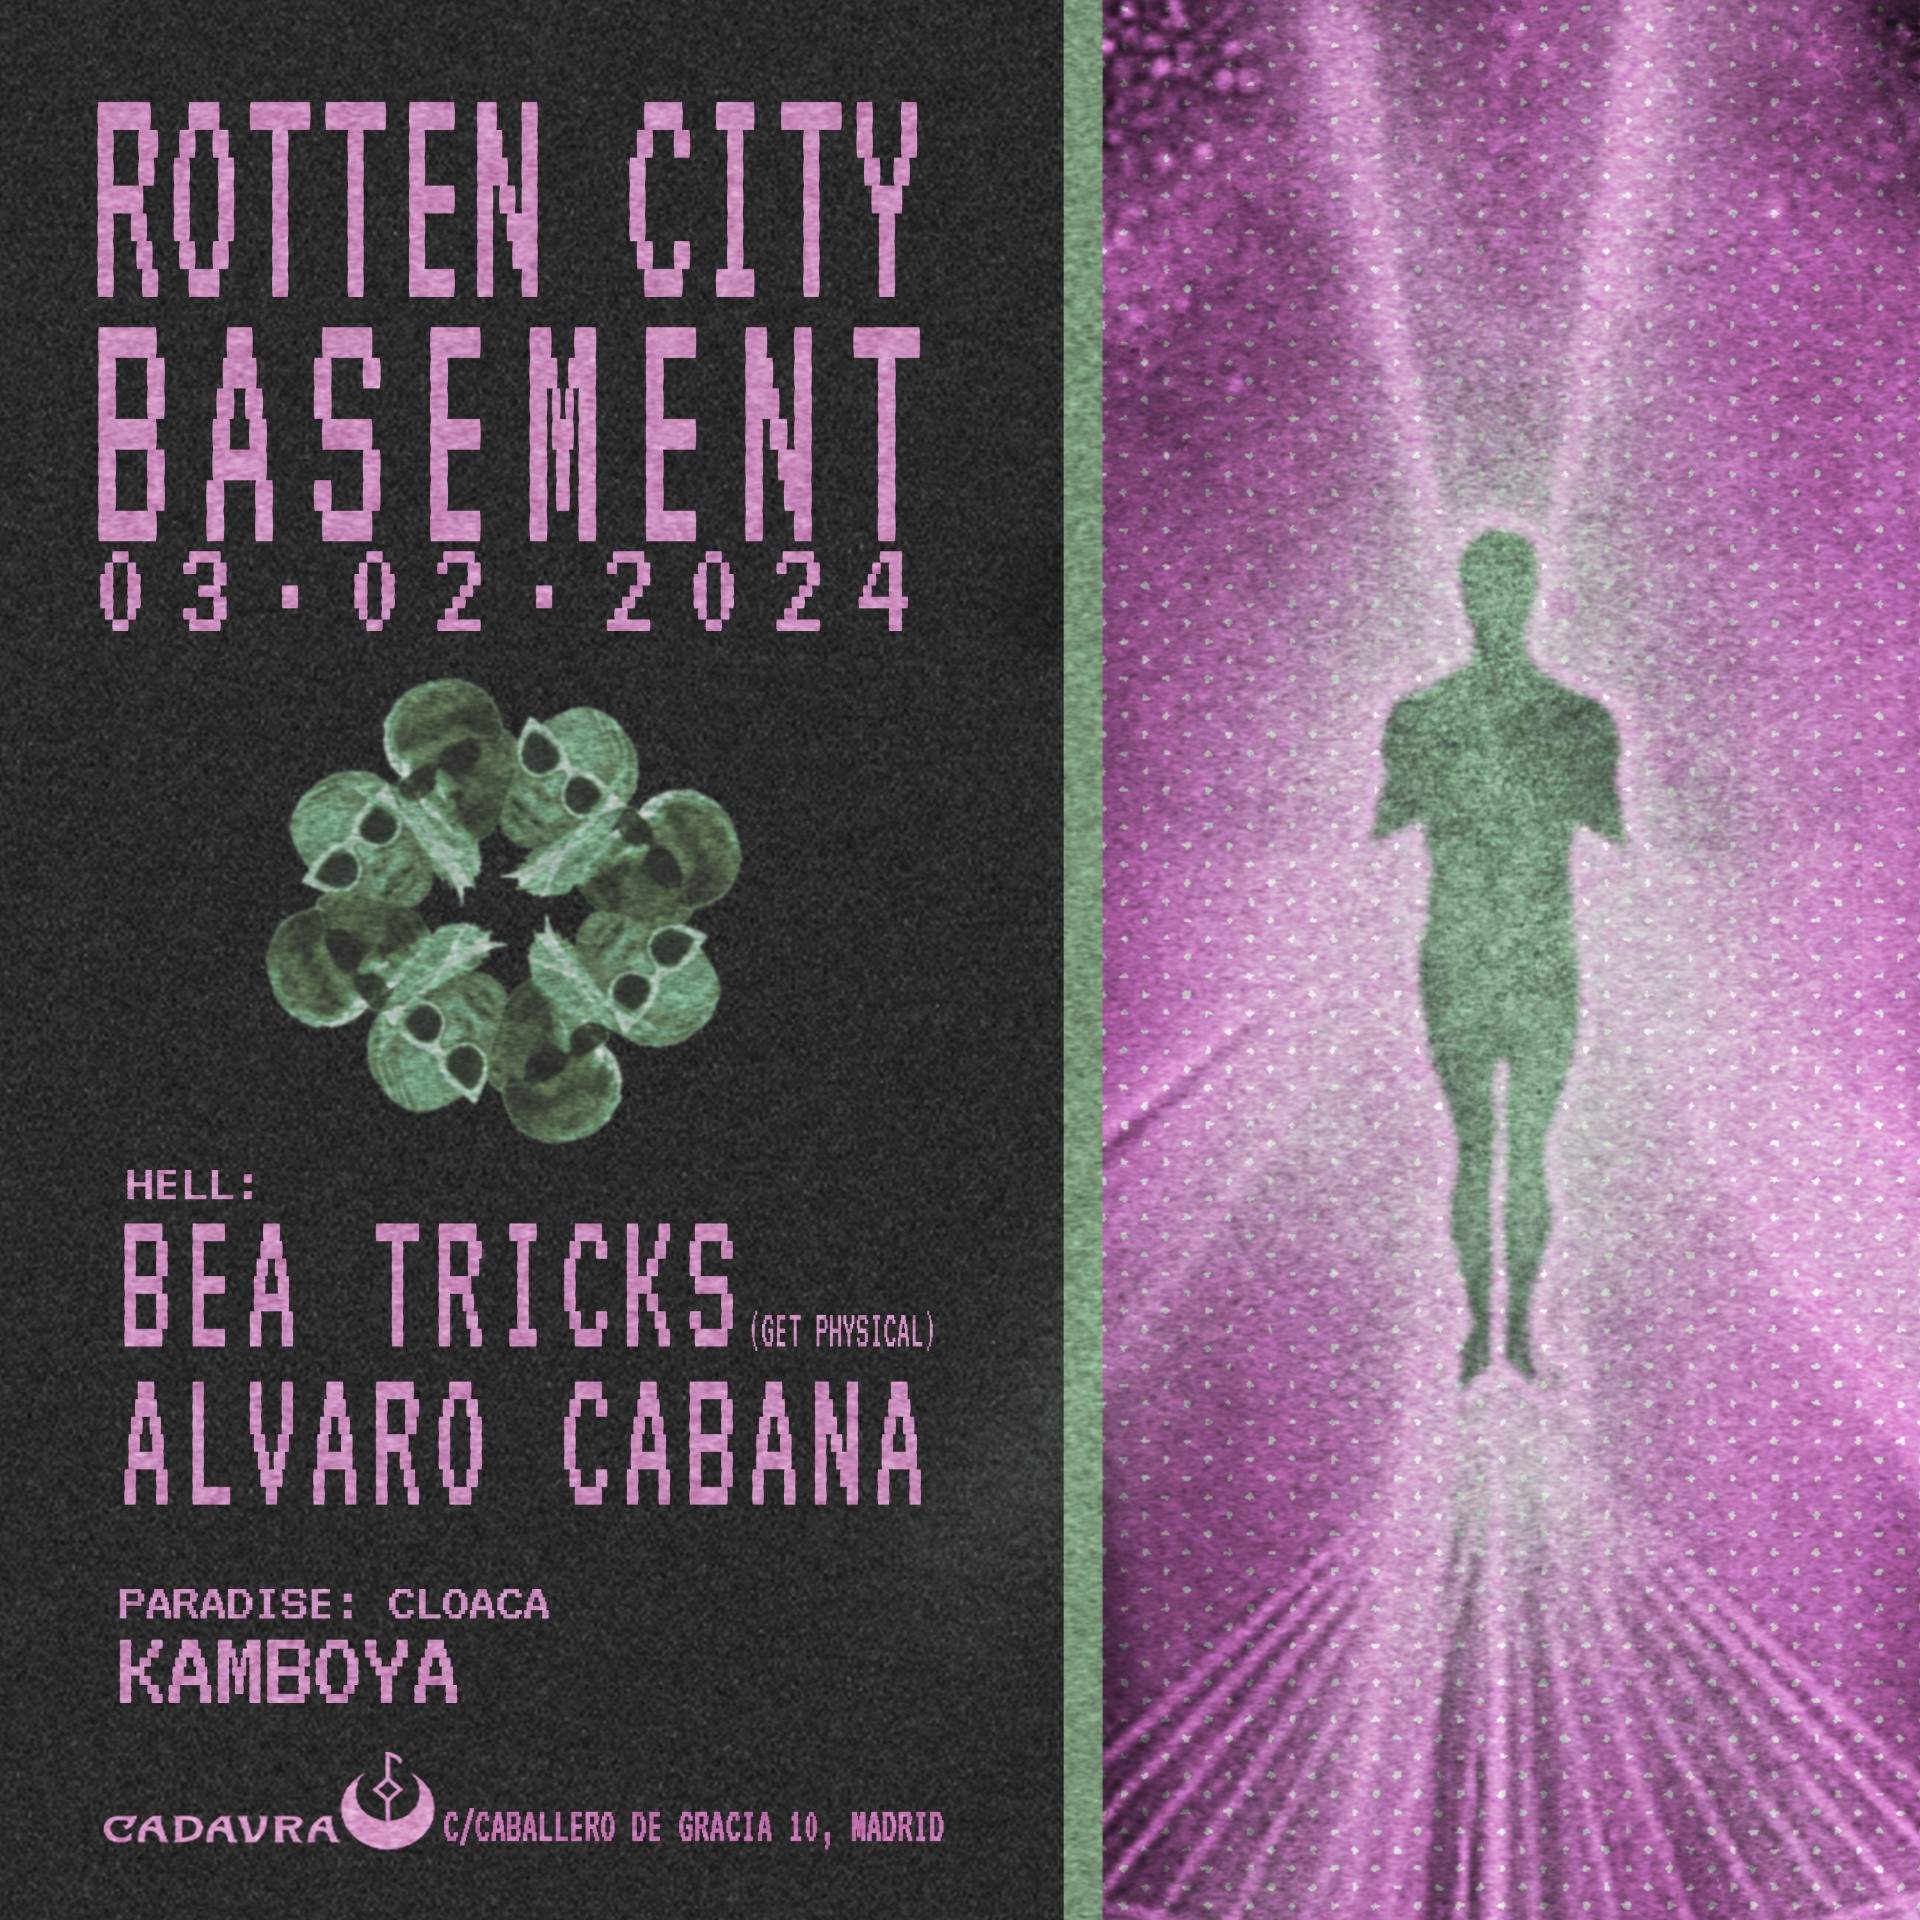 Rotten City Basement with Bea Tricks - フライヤー表